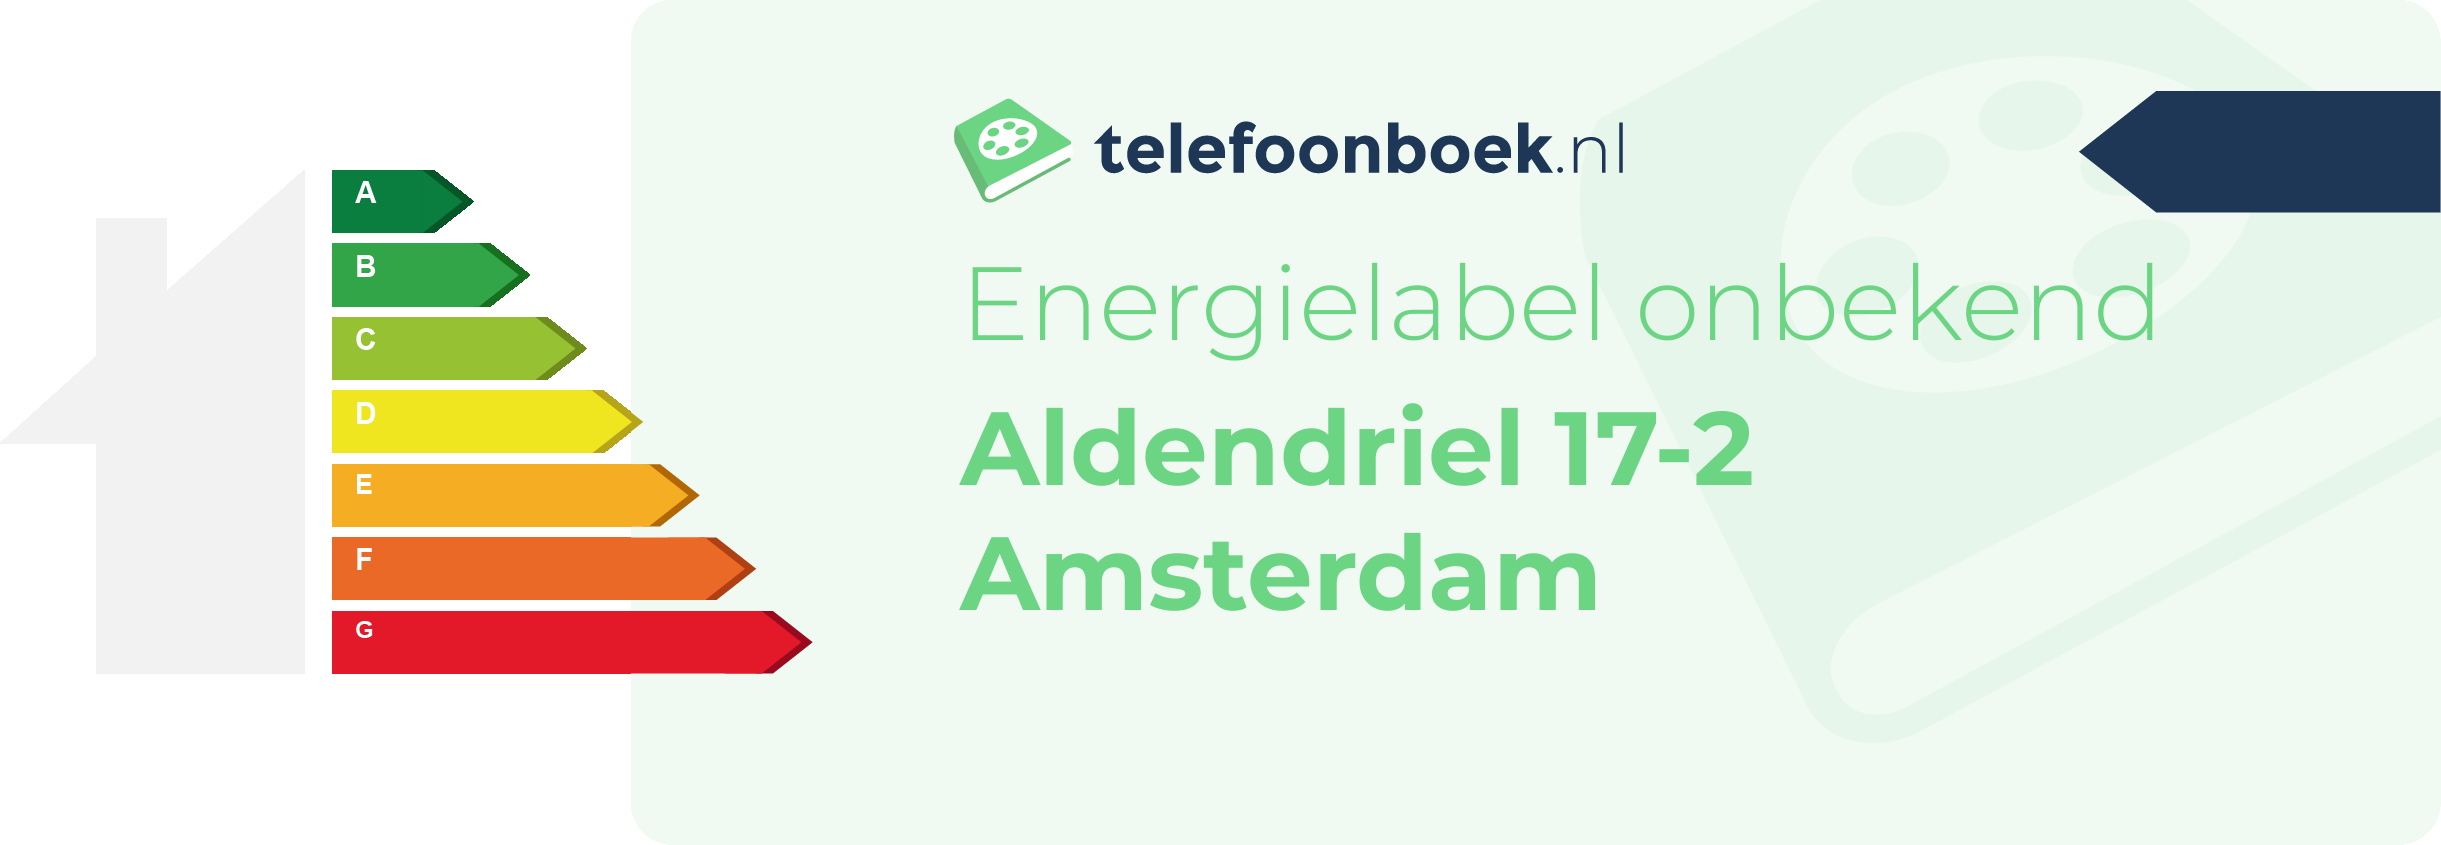 Energielabel Aldendriel 17-2 Amsterdam